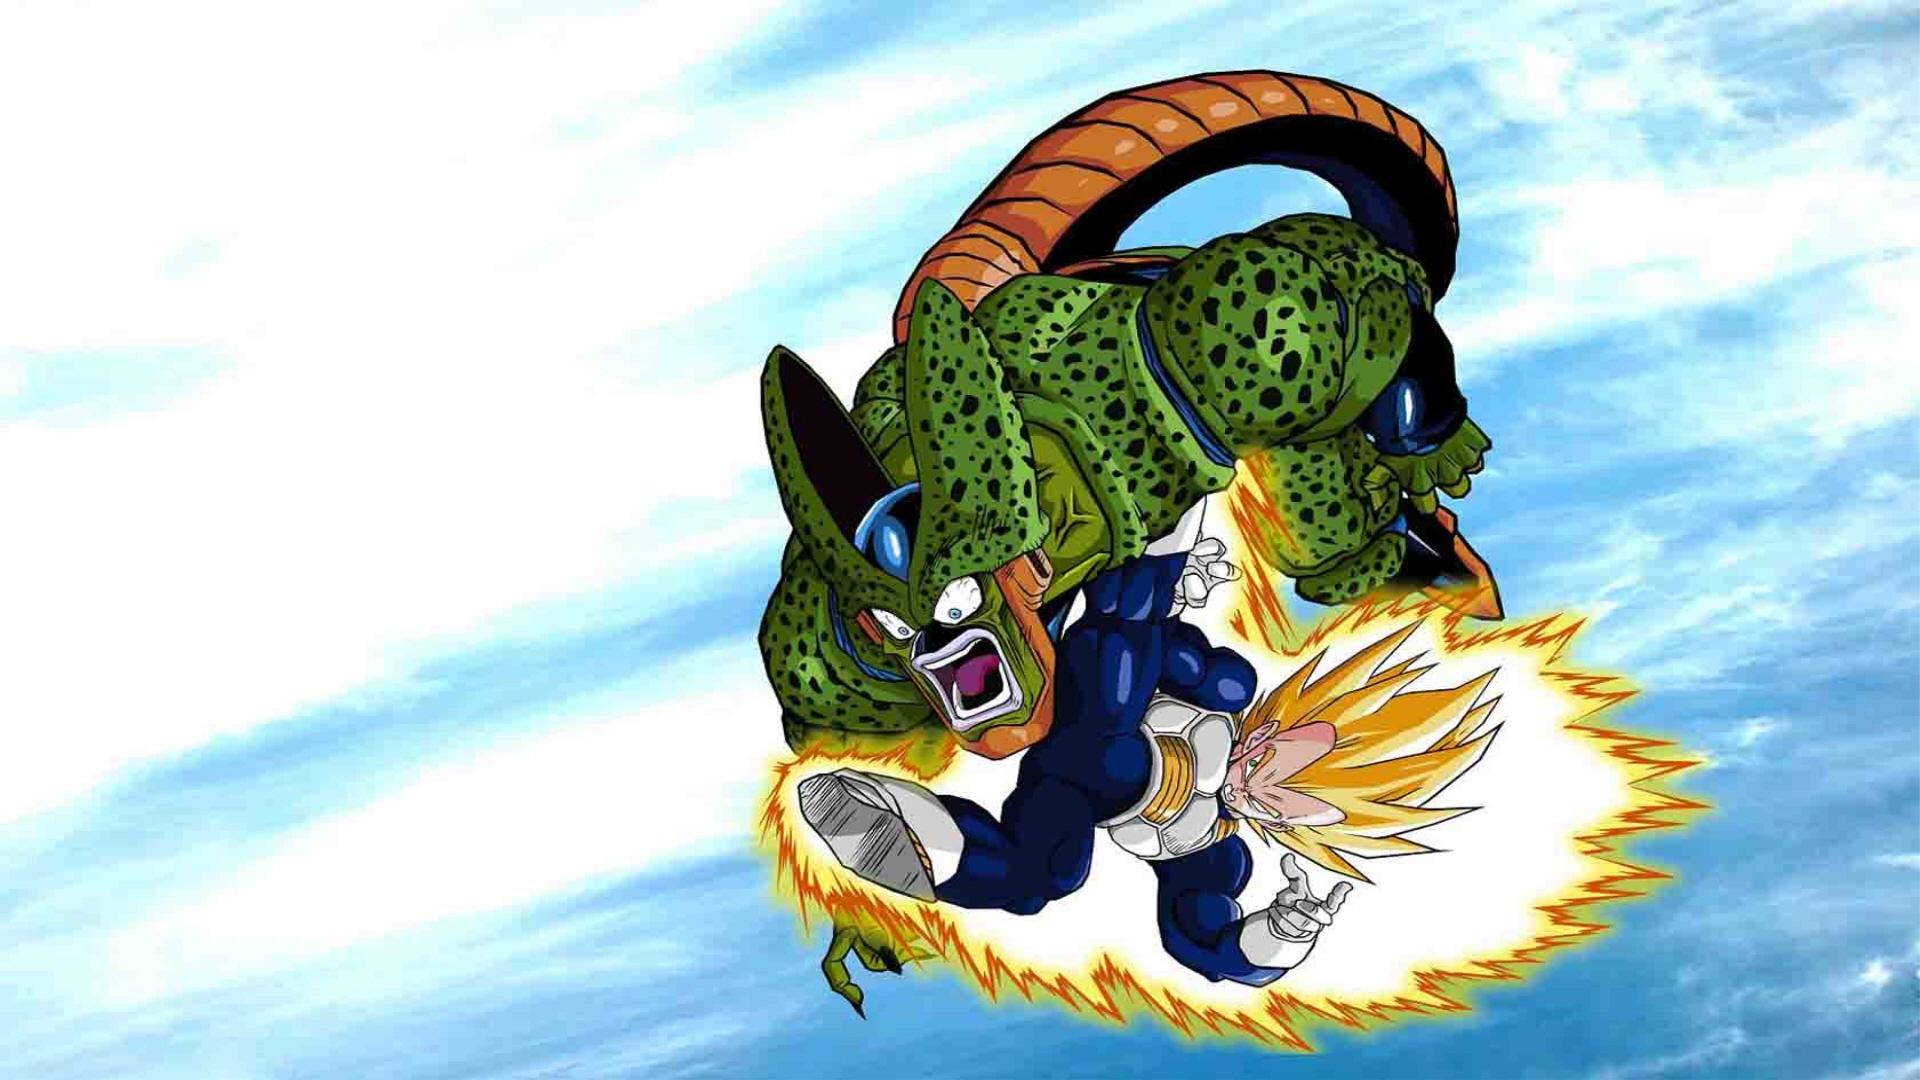 Anime Dragon Ball Z Vegeta Versus Cell Image HD 1920x1080px HD